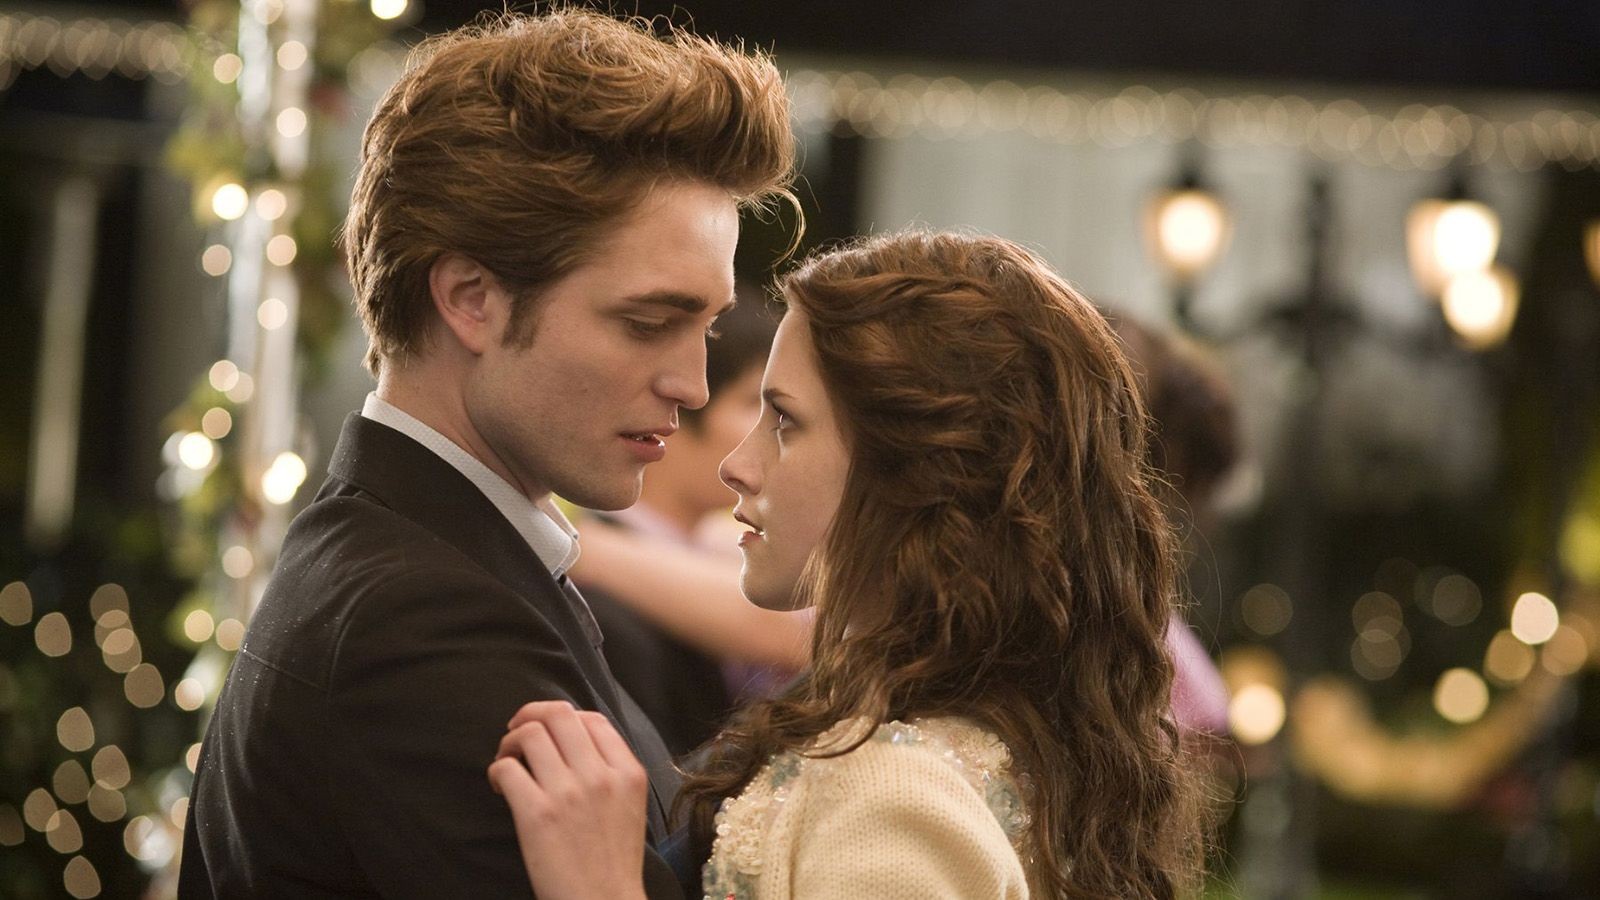 Robert Pattinson was romantically involved with Kristen Stewart before controversies blew up.